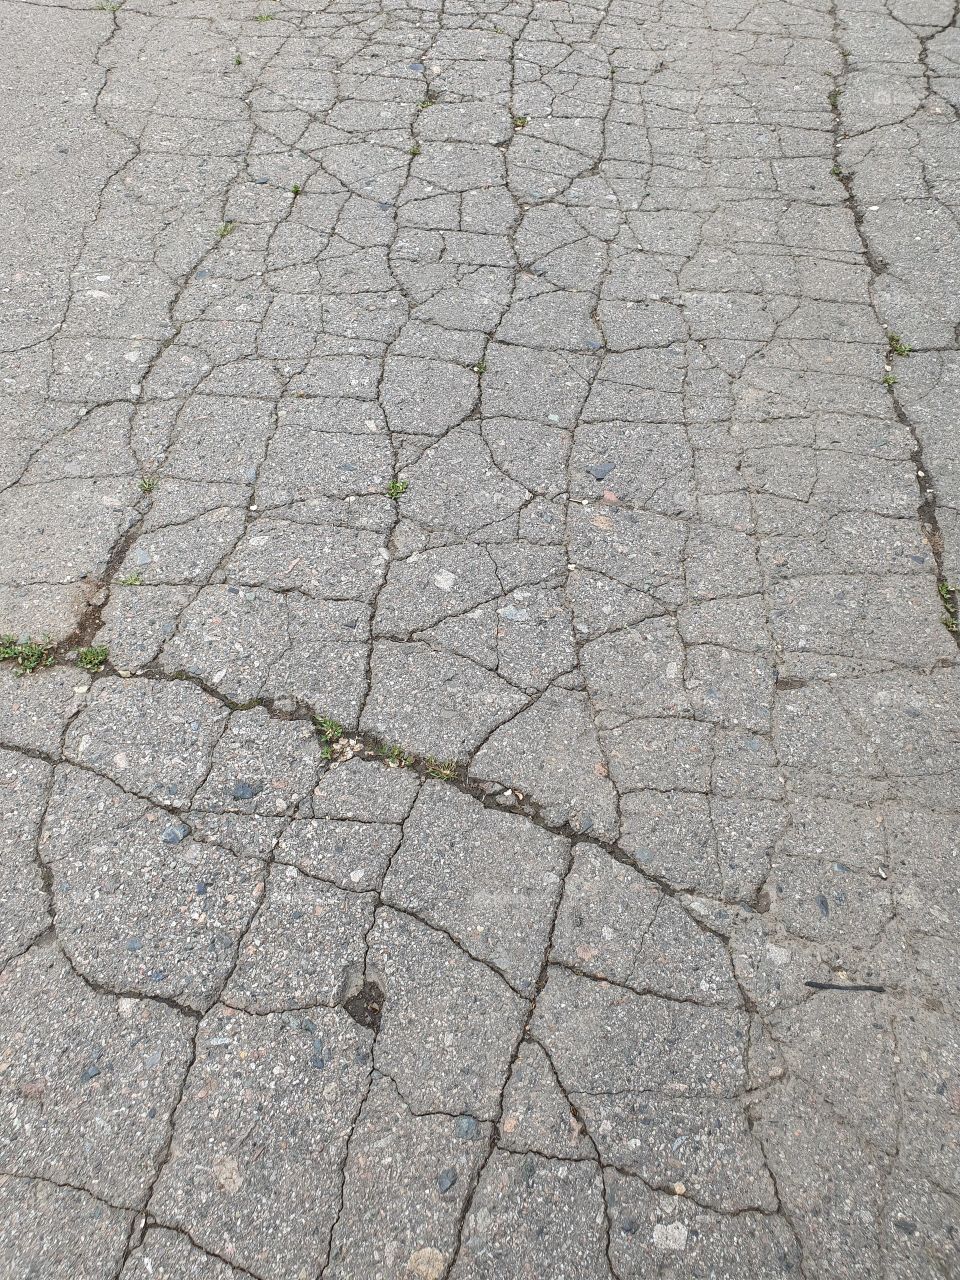 broken pavement patterns